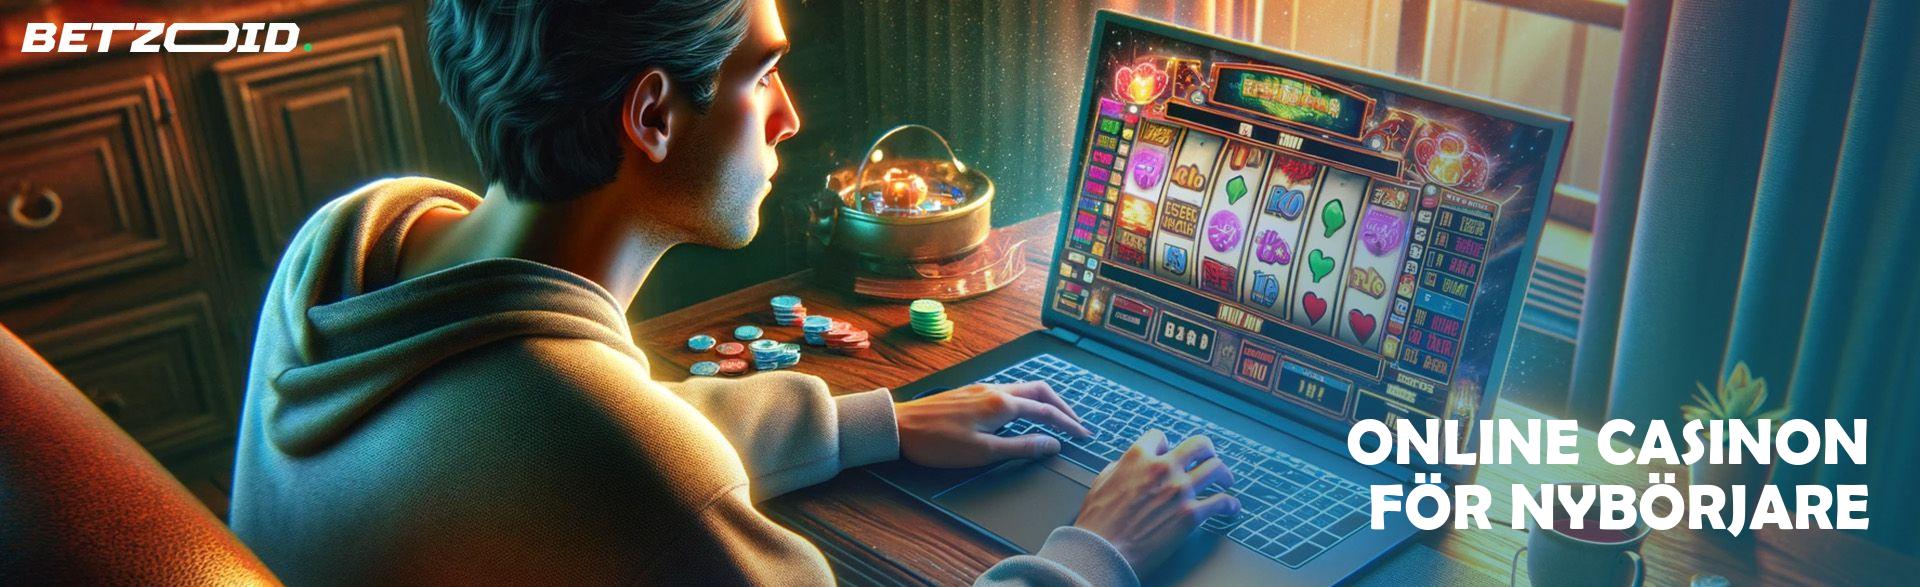 Online Casinon för Nybörjare.